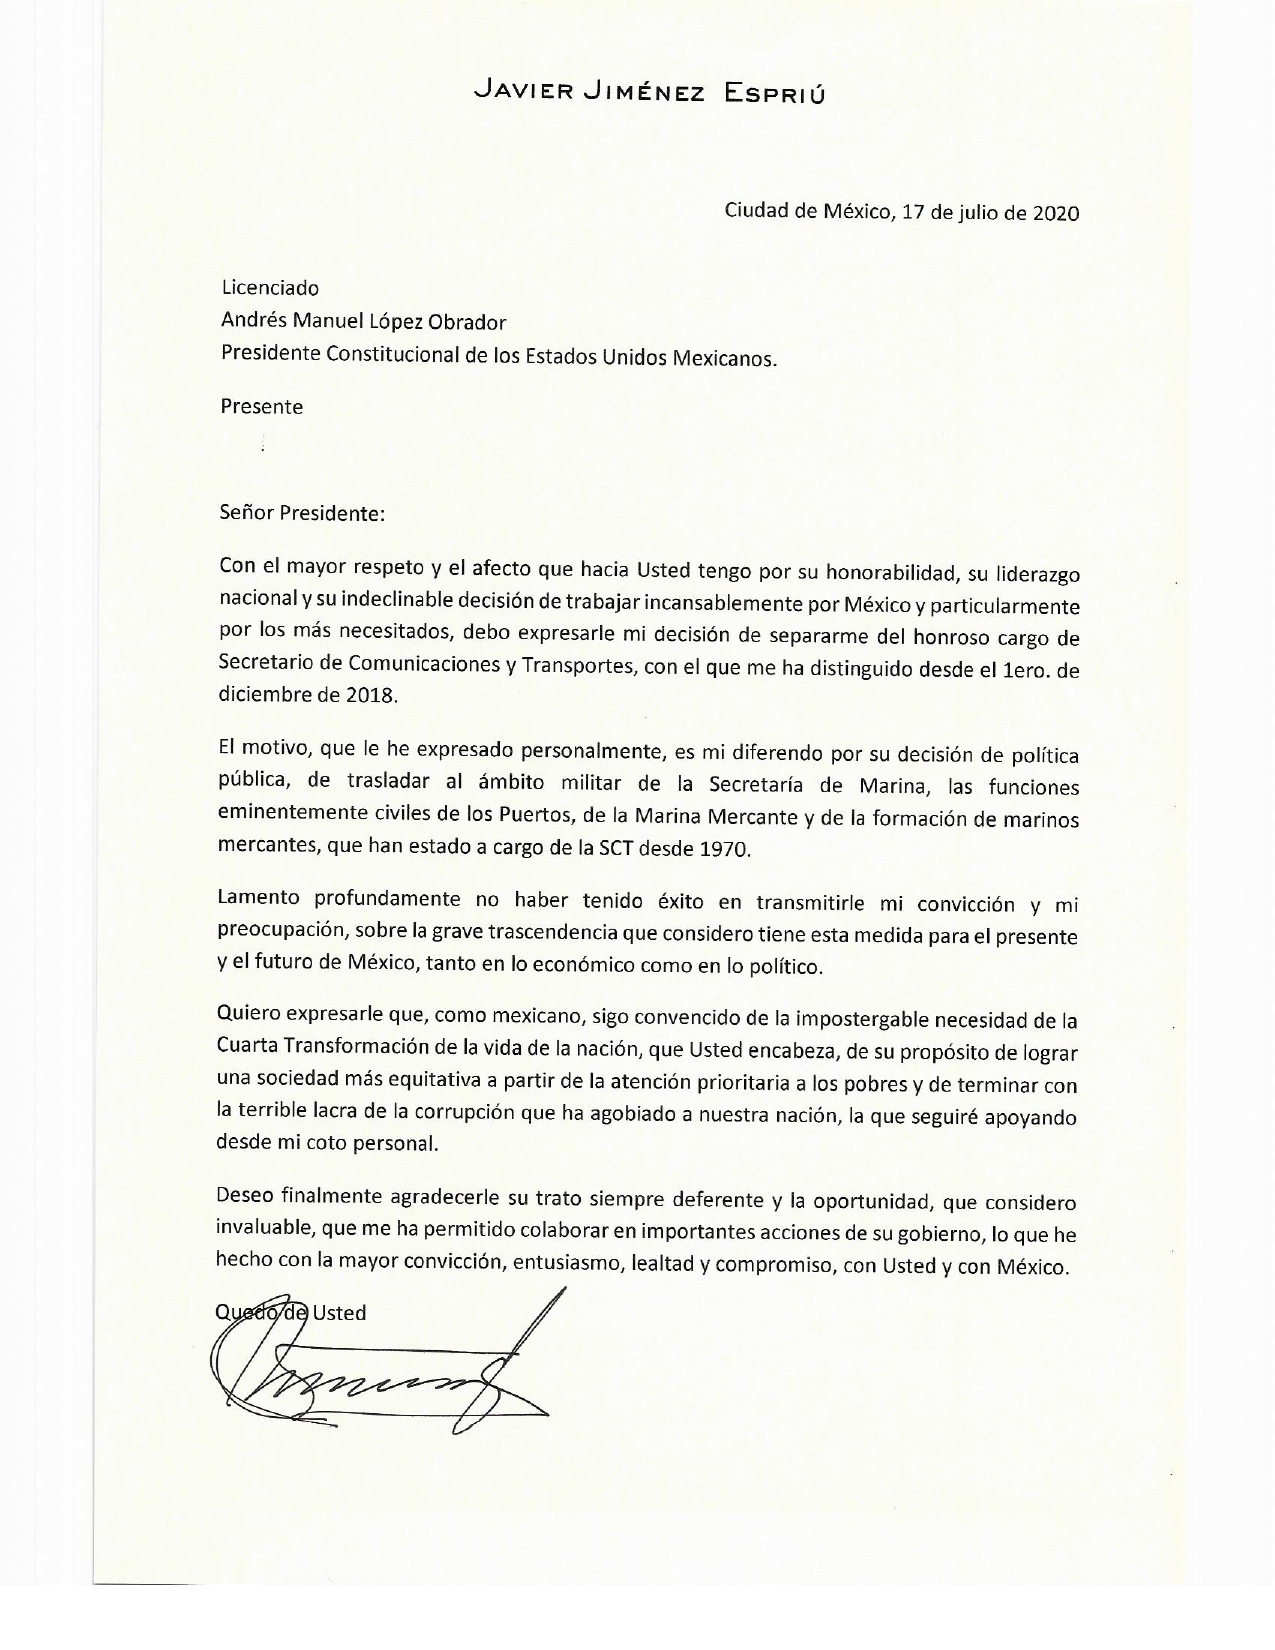 Confirman renuncia de Jiménez Espriú a la SCT; entra Díaz Leal